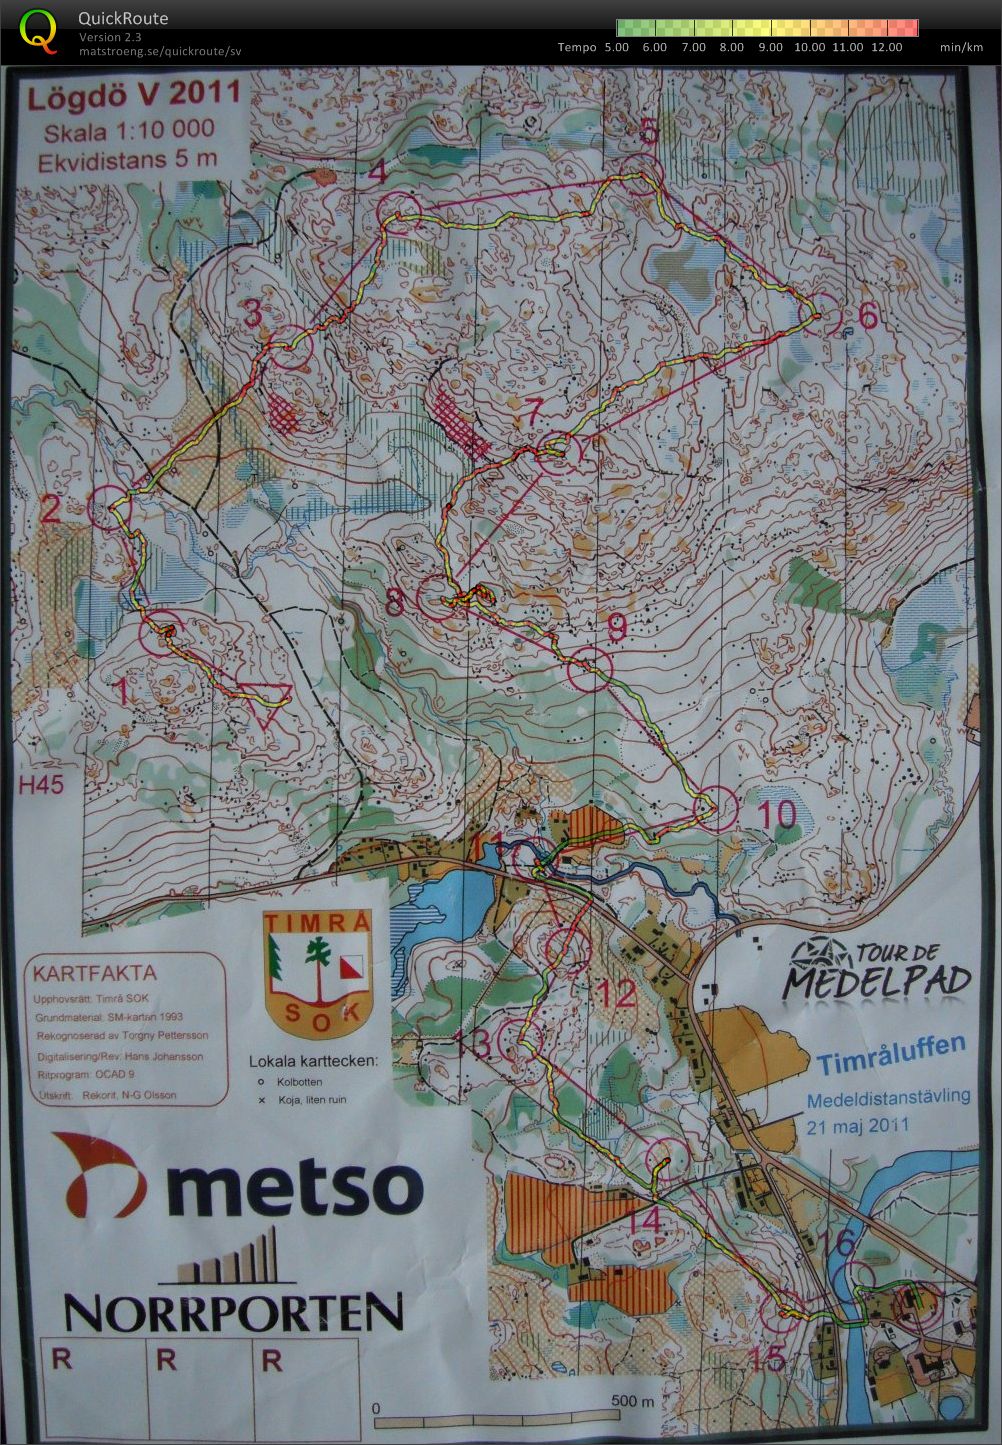 Tour de Medelpad II (21-05-2011)